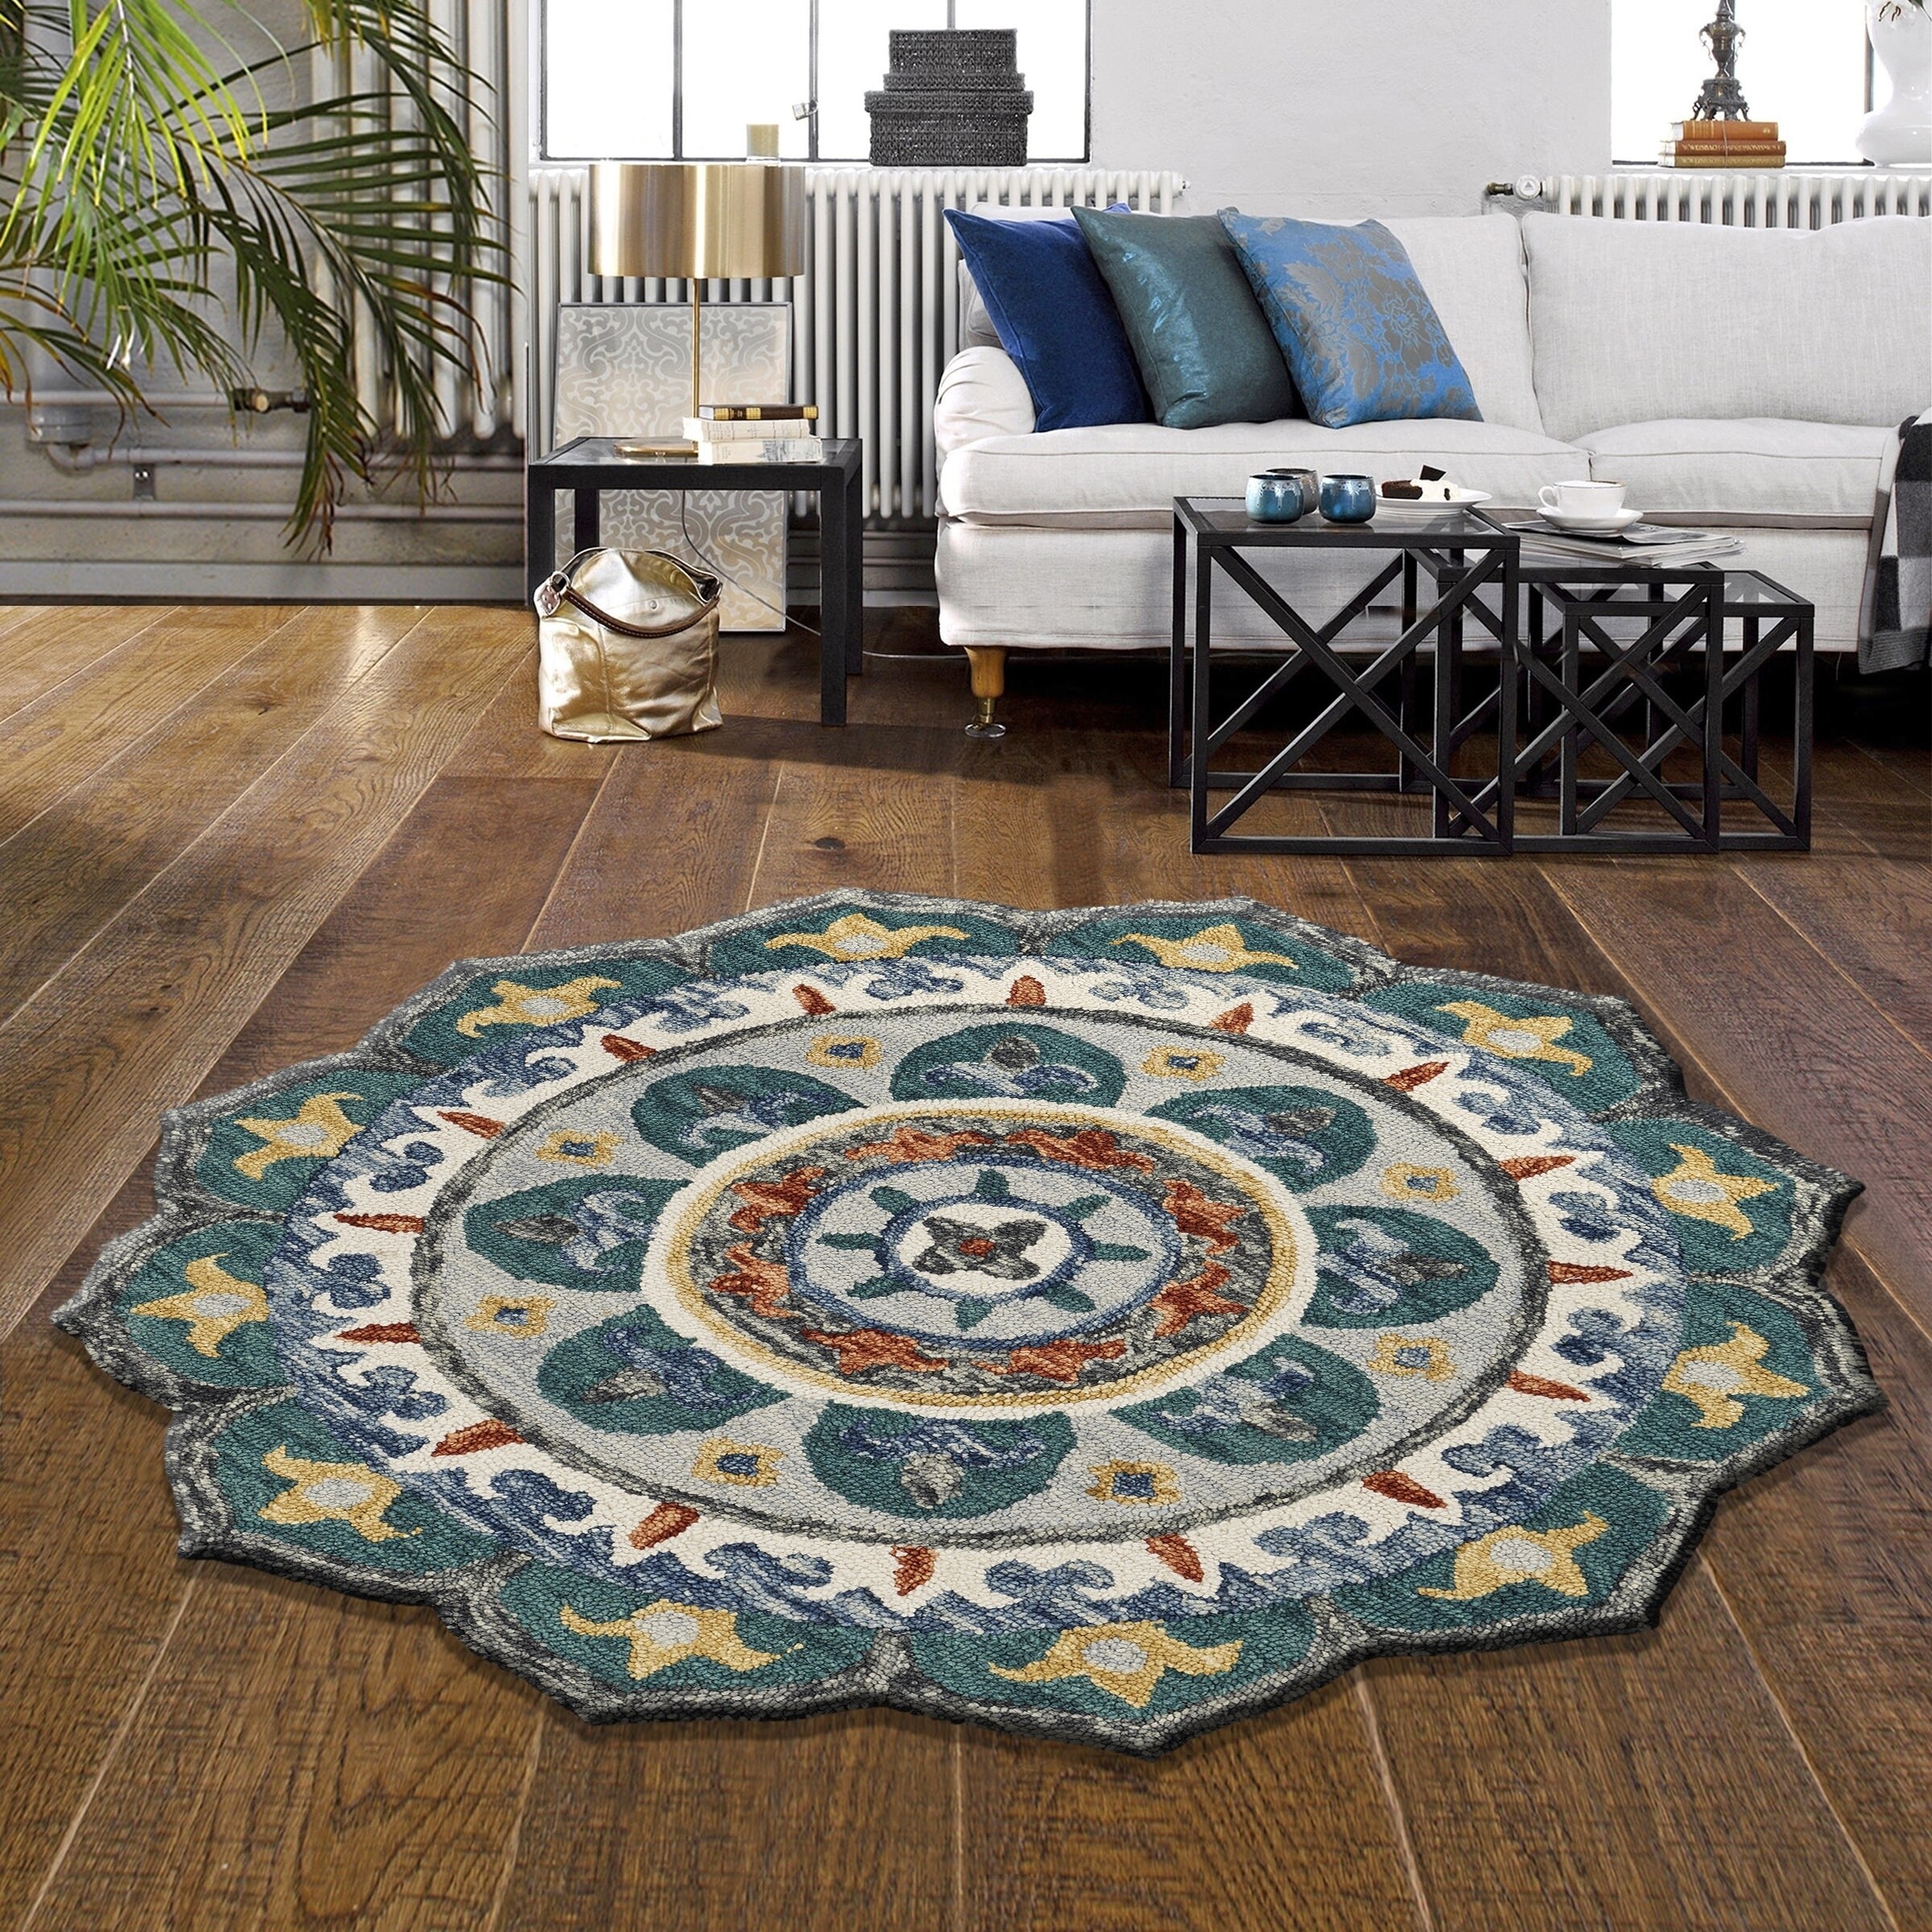 Classic Mandala Flower Round Yoga Carpet Bedroom Area Rugs Living Room Floor Mat 